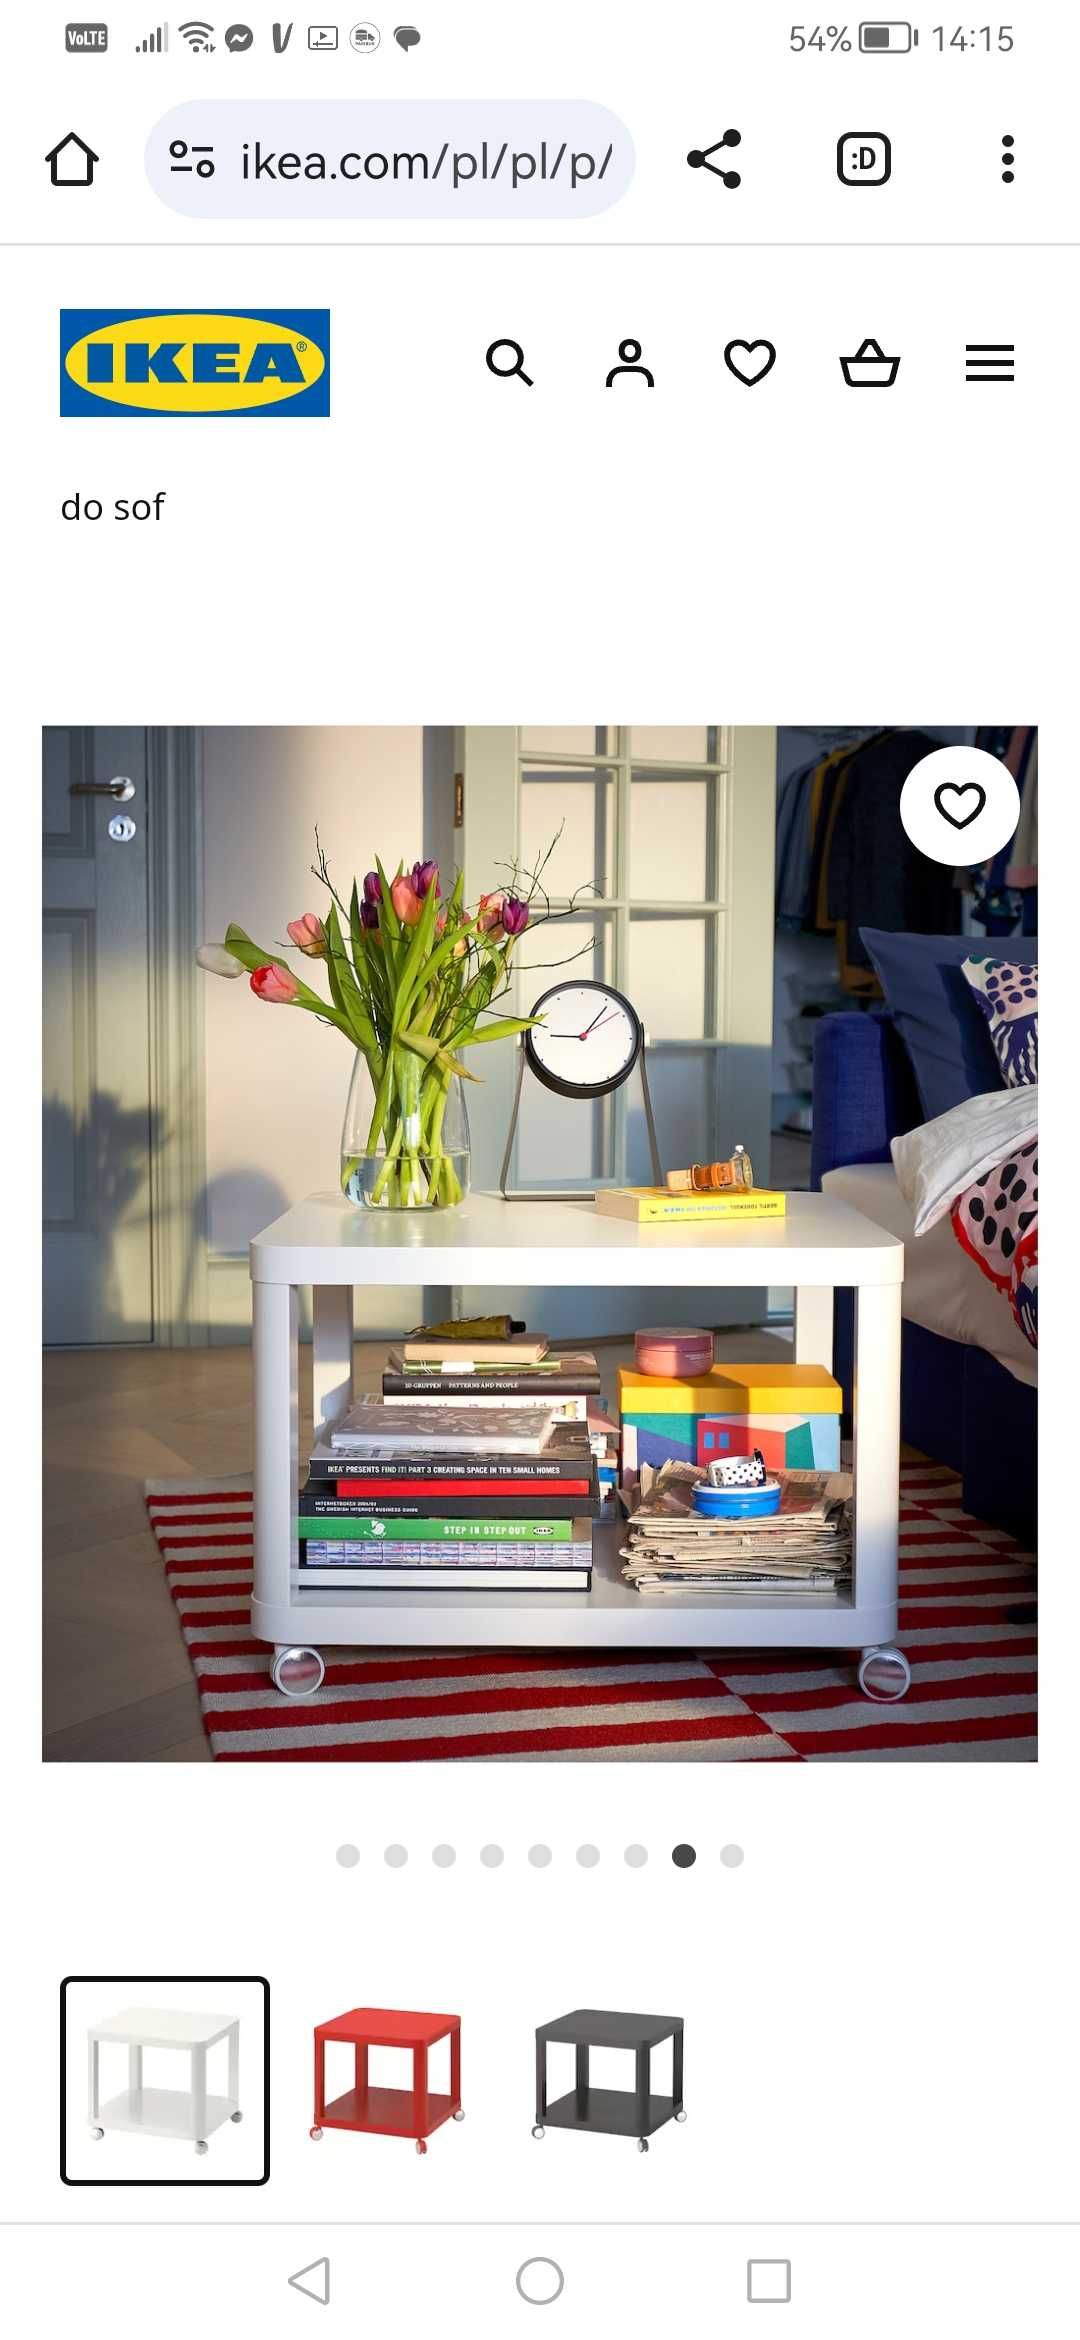 Ikea tingby stolik na kółkach